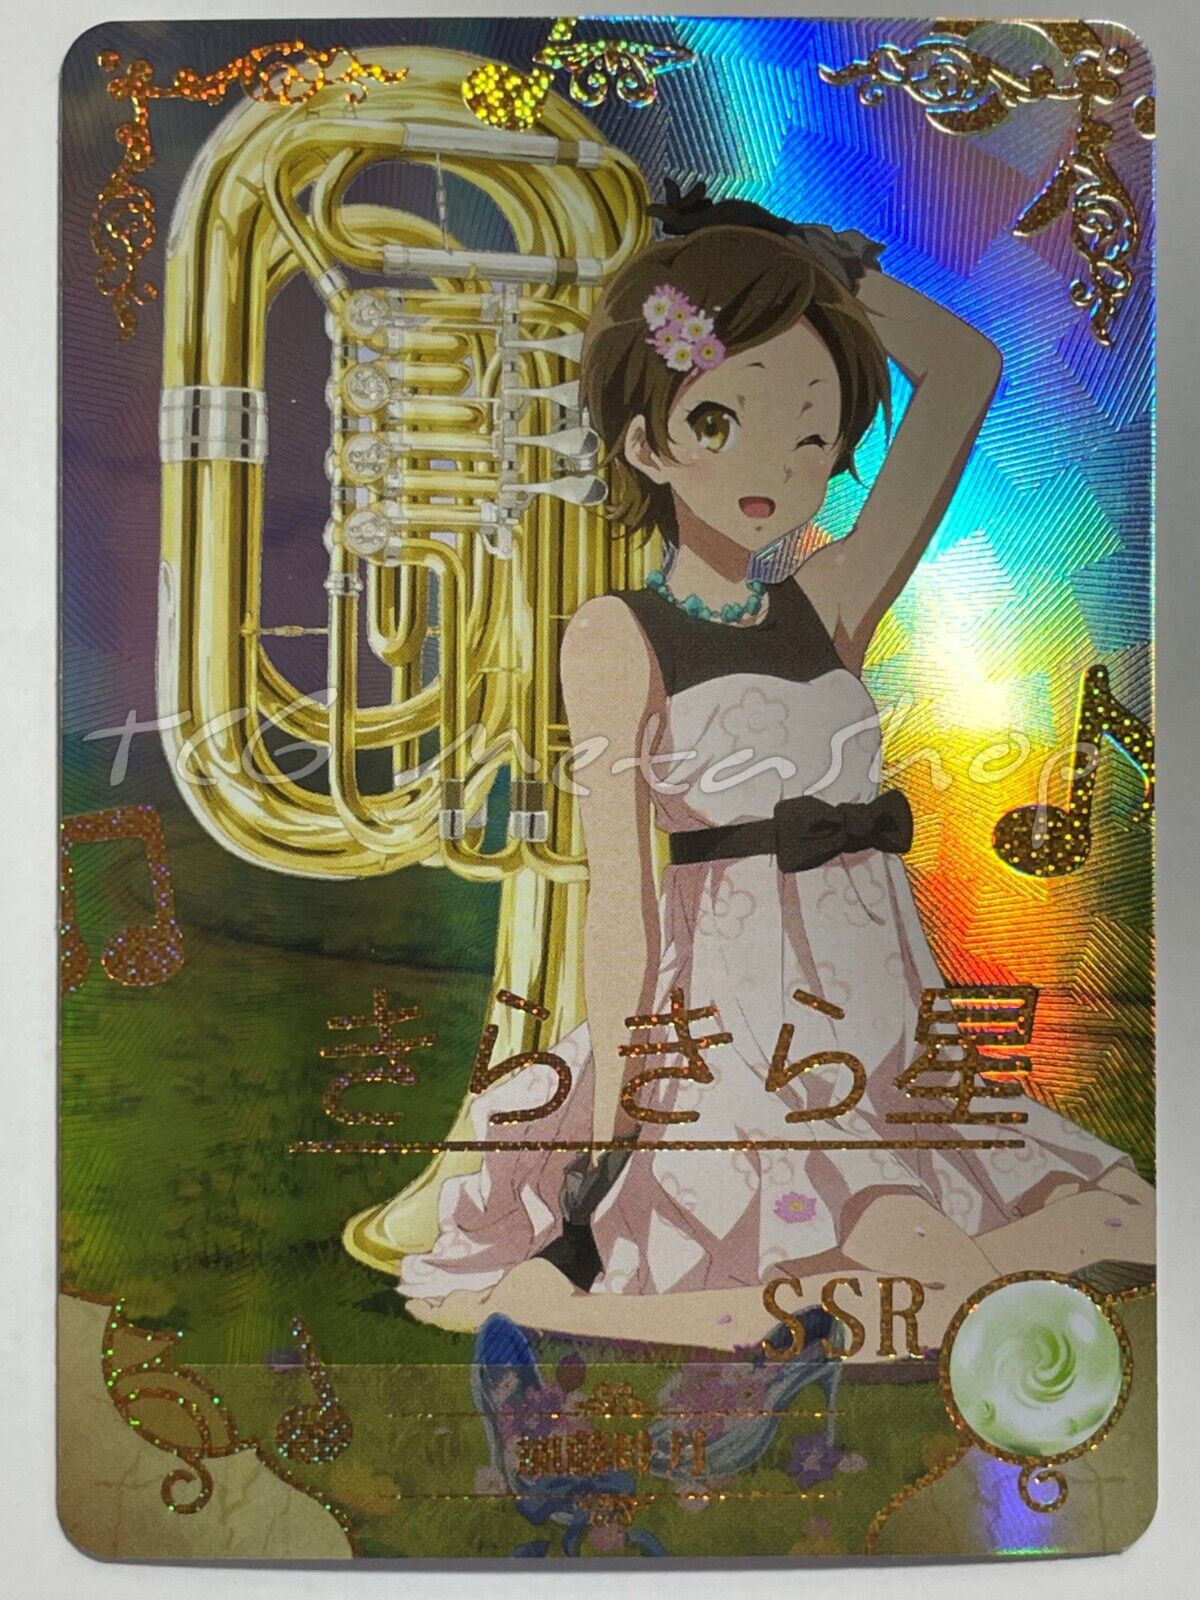 🔥 Goddess Story - 5m03 - [Pick Your Singles] Waifu Anime Doujin Cards 🔥